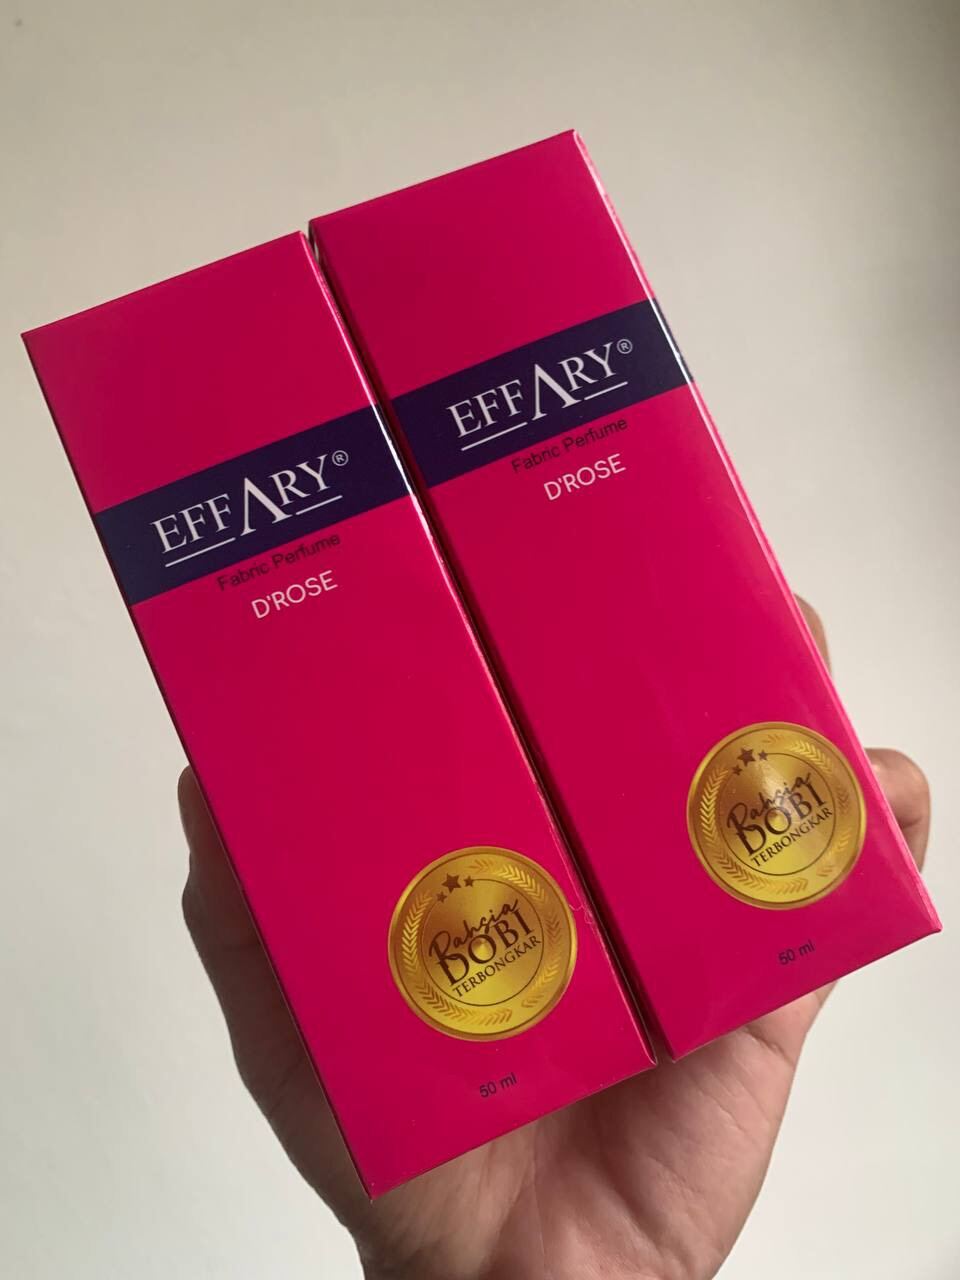 Effary fabric perfume